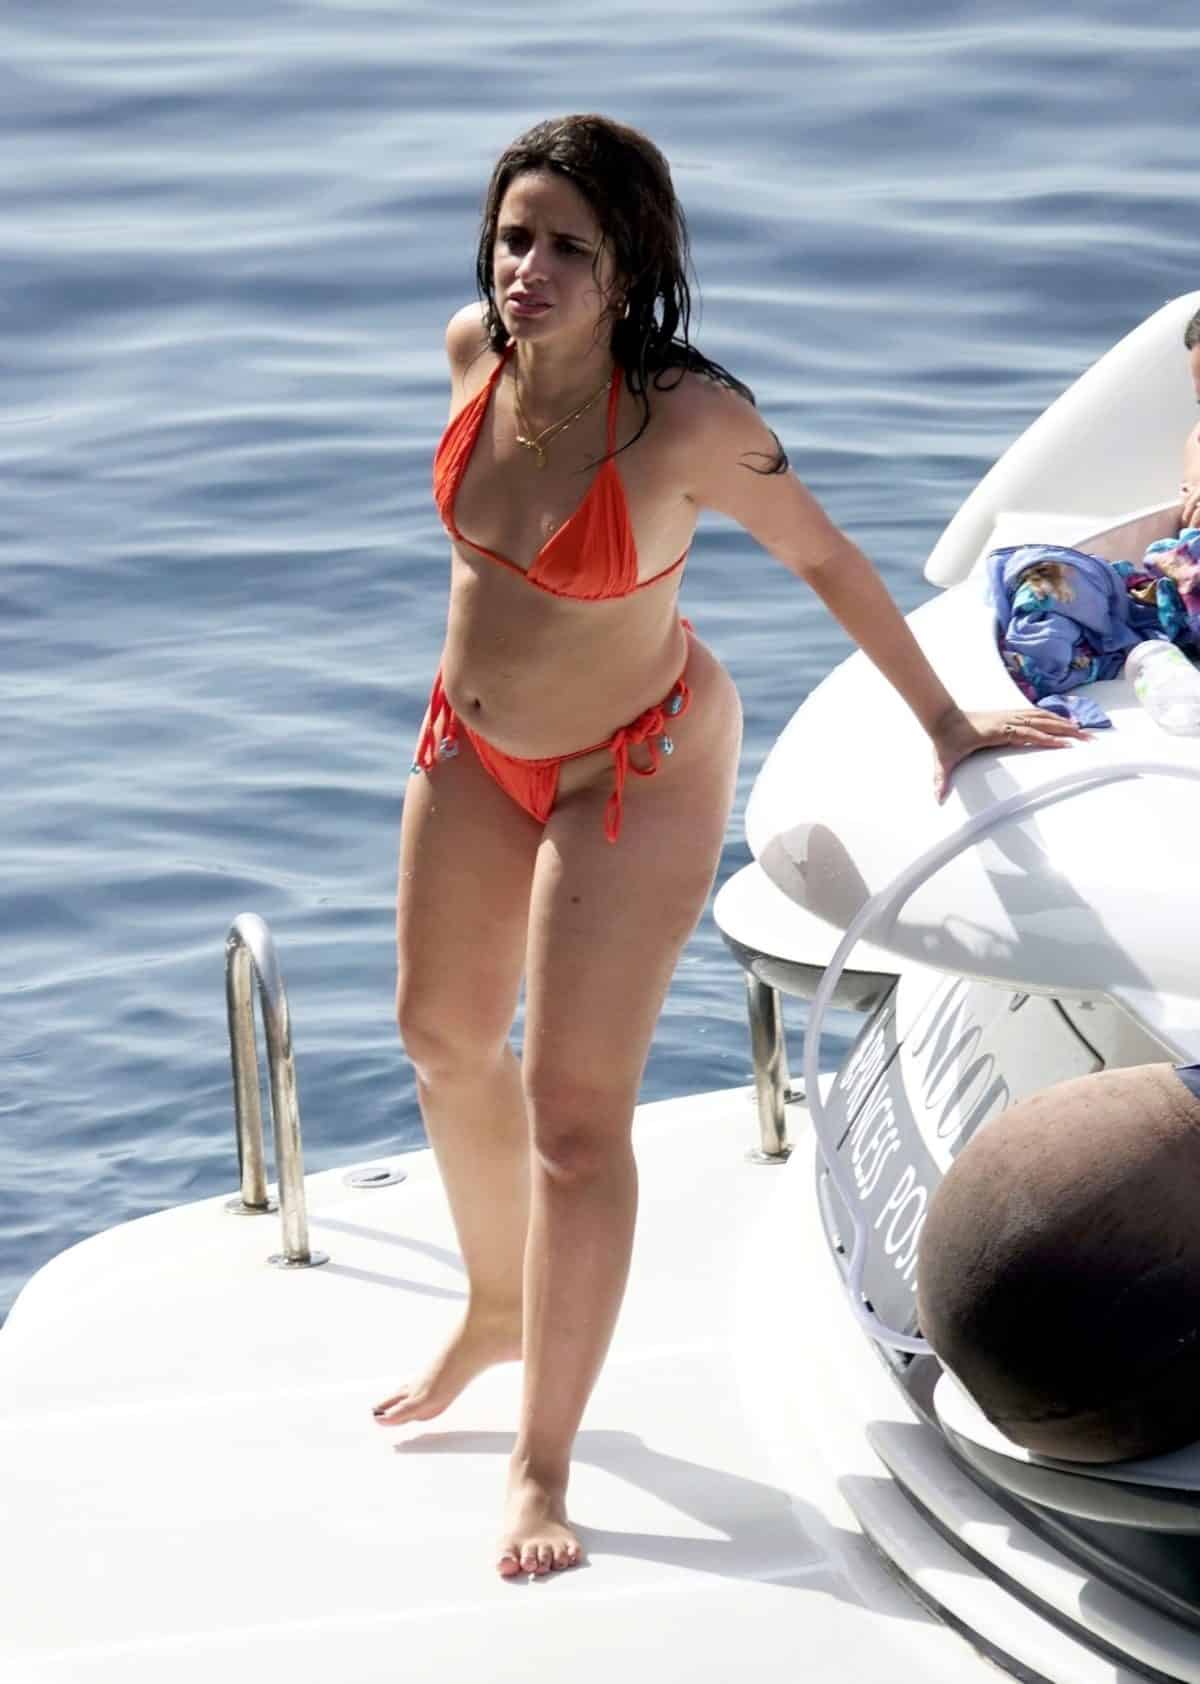 Camila Cabello Wears an Orange Bikini During her Idyllic Italian Vacation